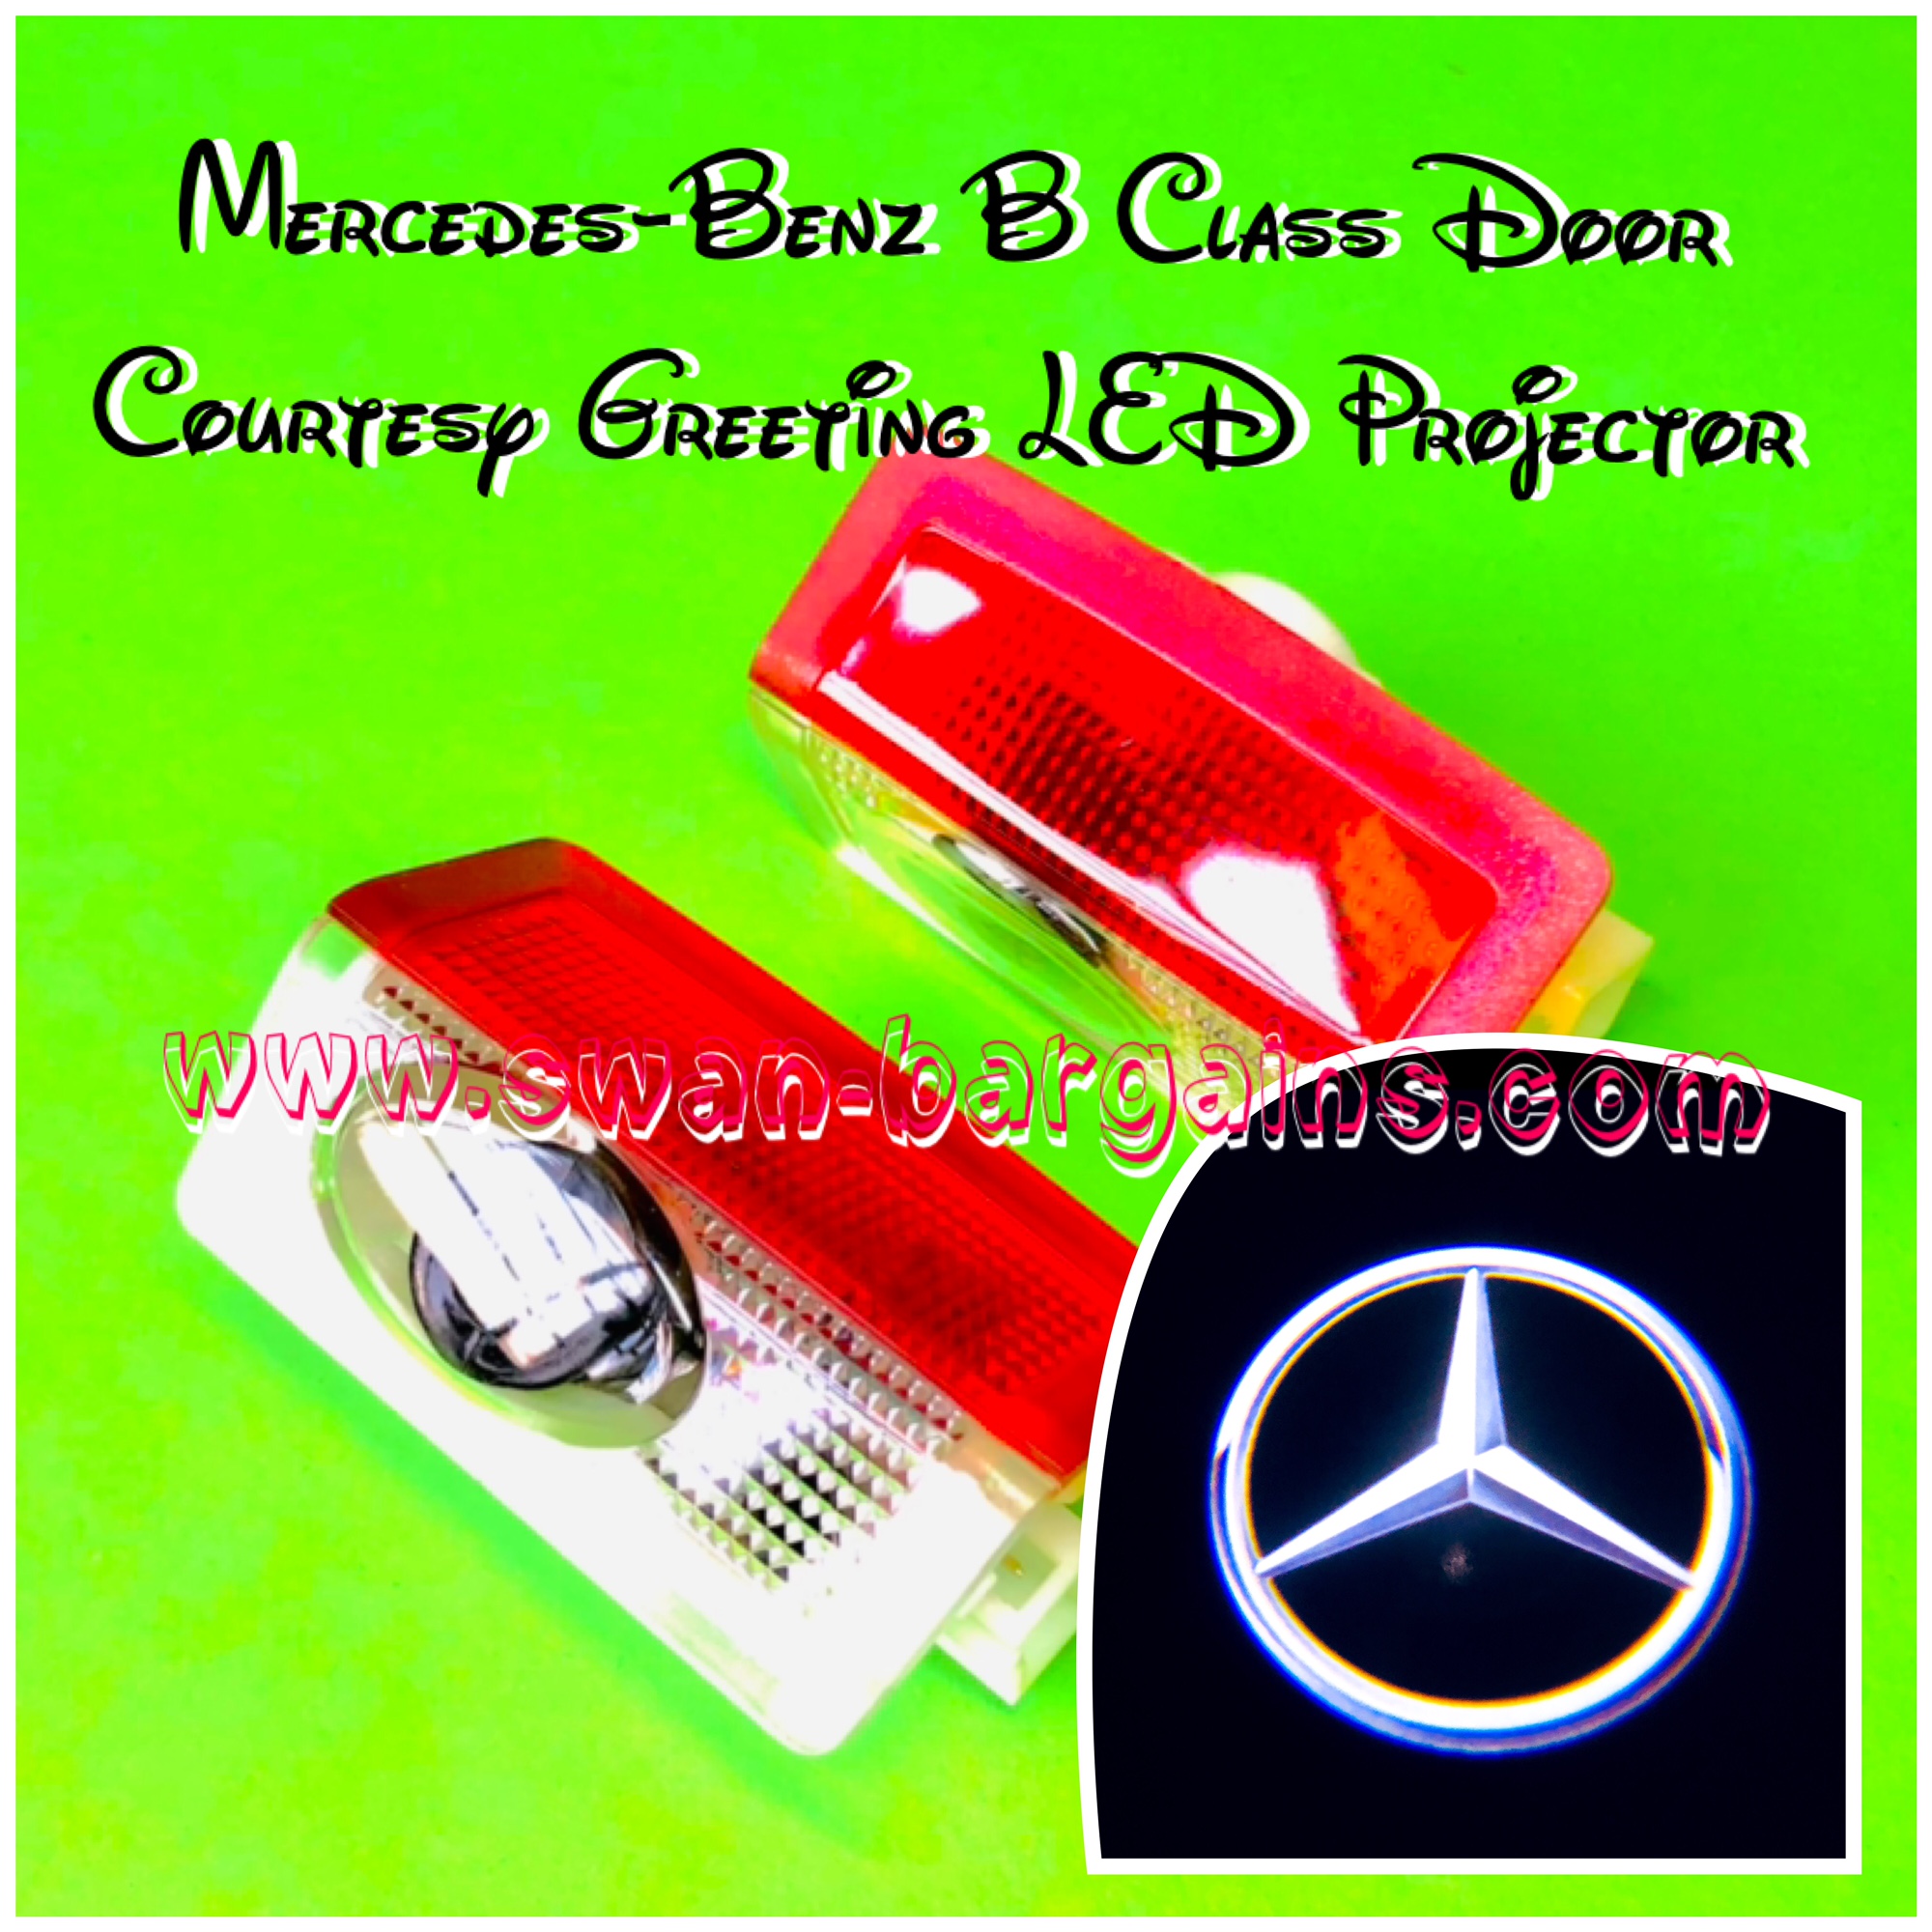 Mercedes Benz B Class Door Courtesy LED Projector Light Singapore - Plain Silver Star